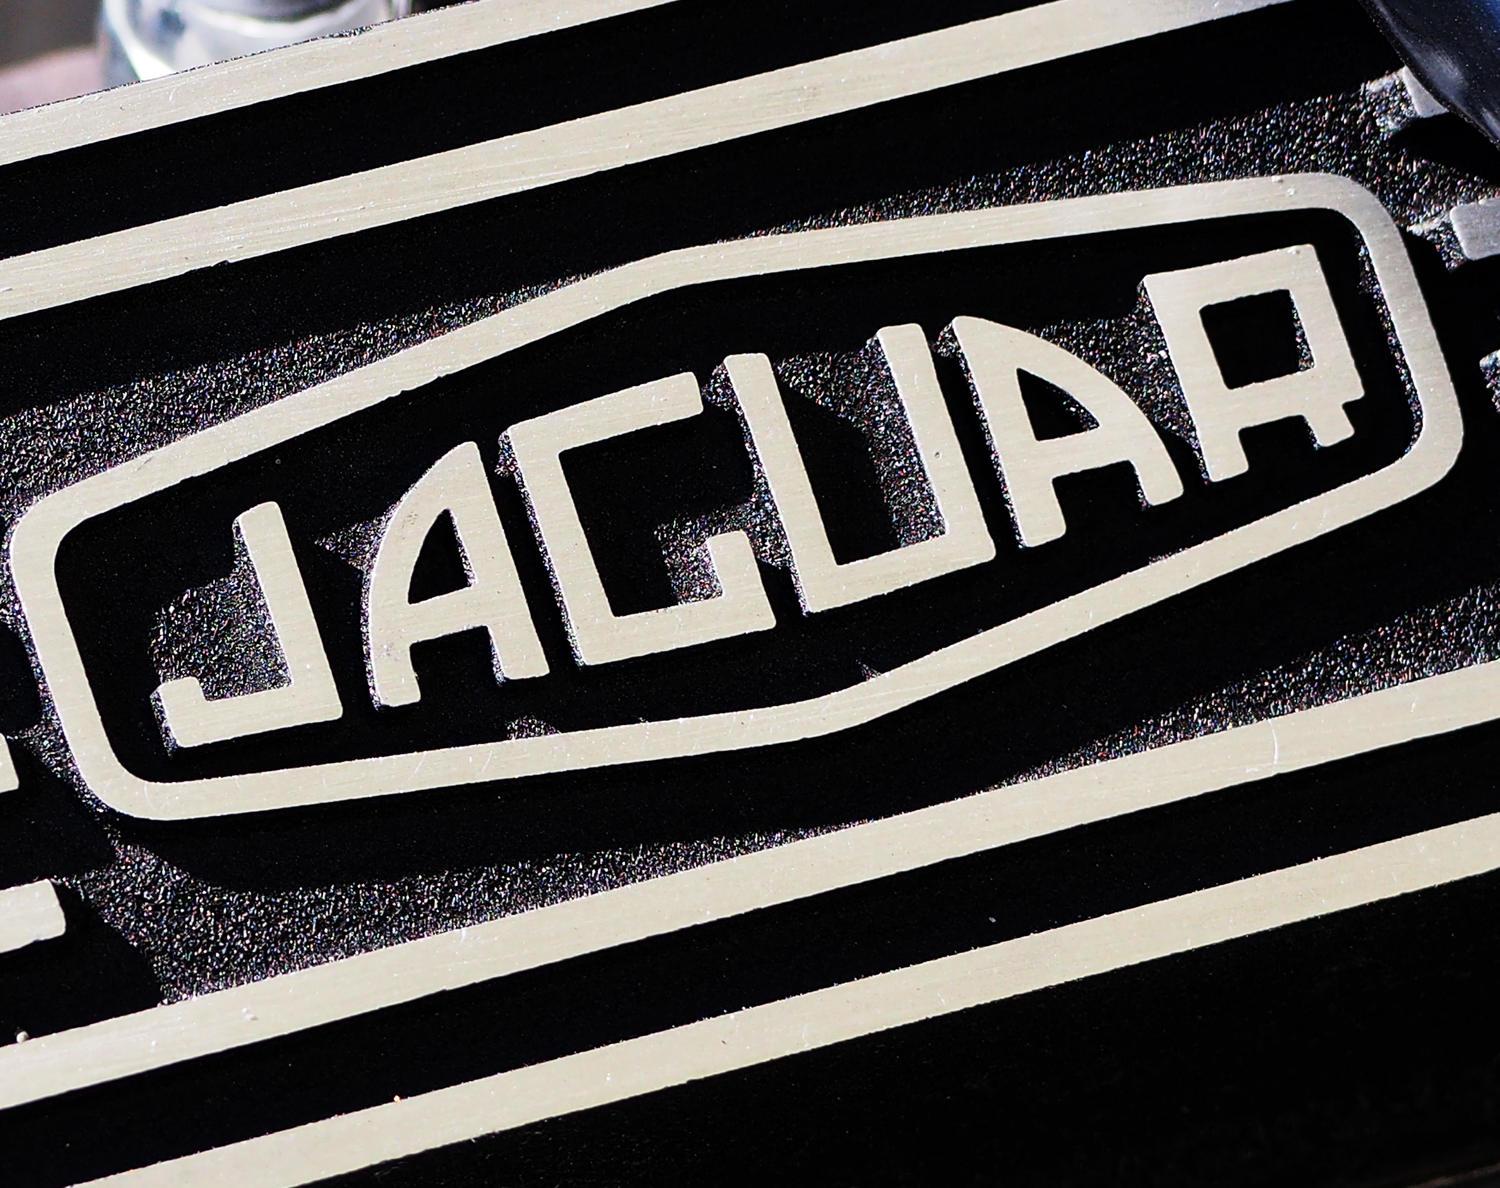 British typograph - Jaguar